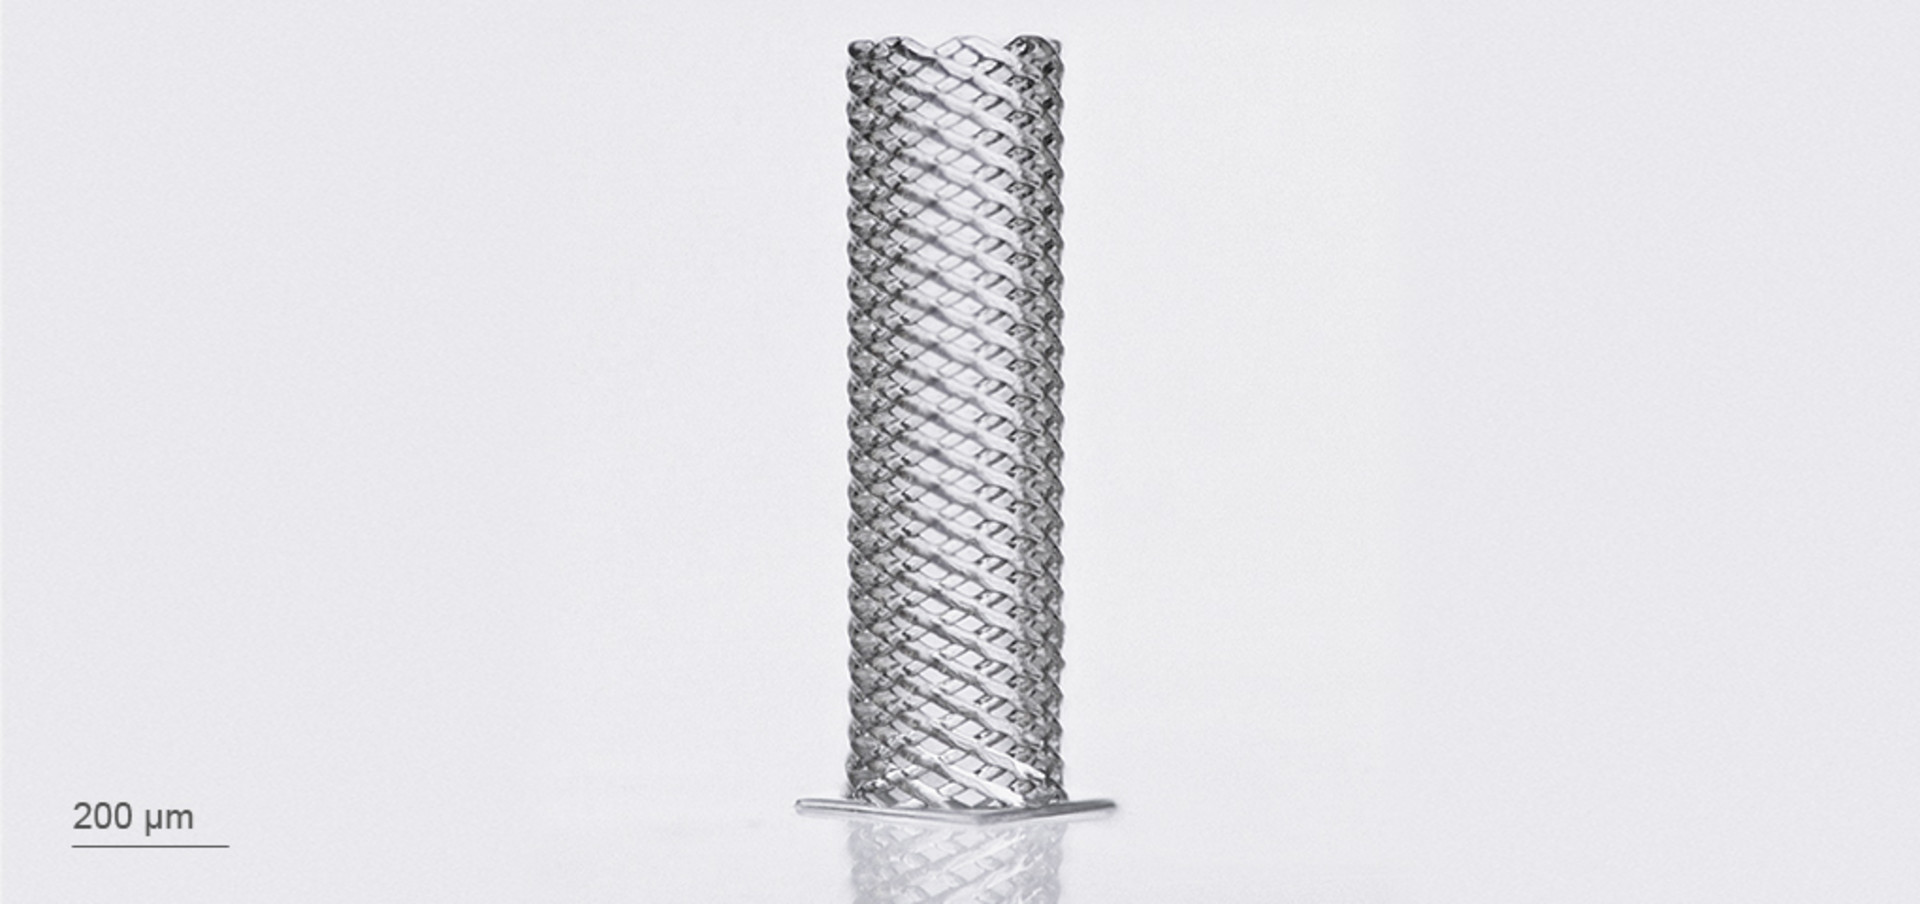 3D-printed mesh tube using IP-PDMS